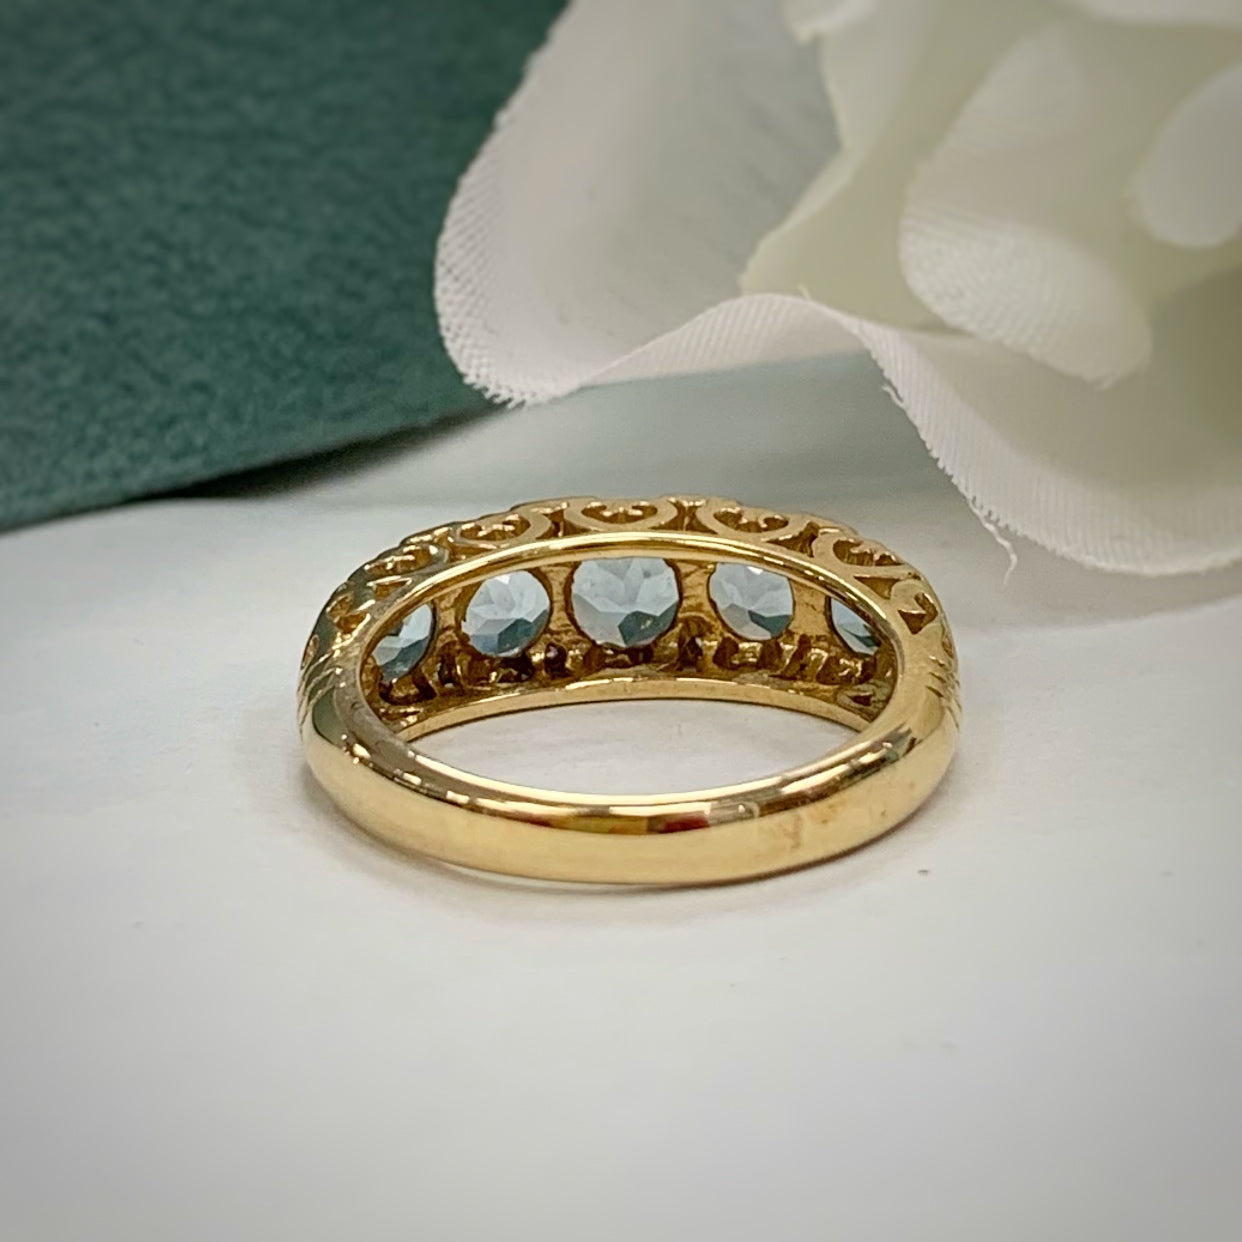 Edwardian Inspired 9ct Yellow Gold Aquamarine and Diamond Ring- SIZE M